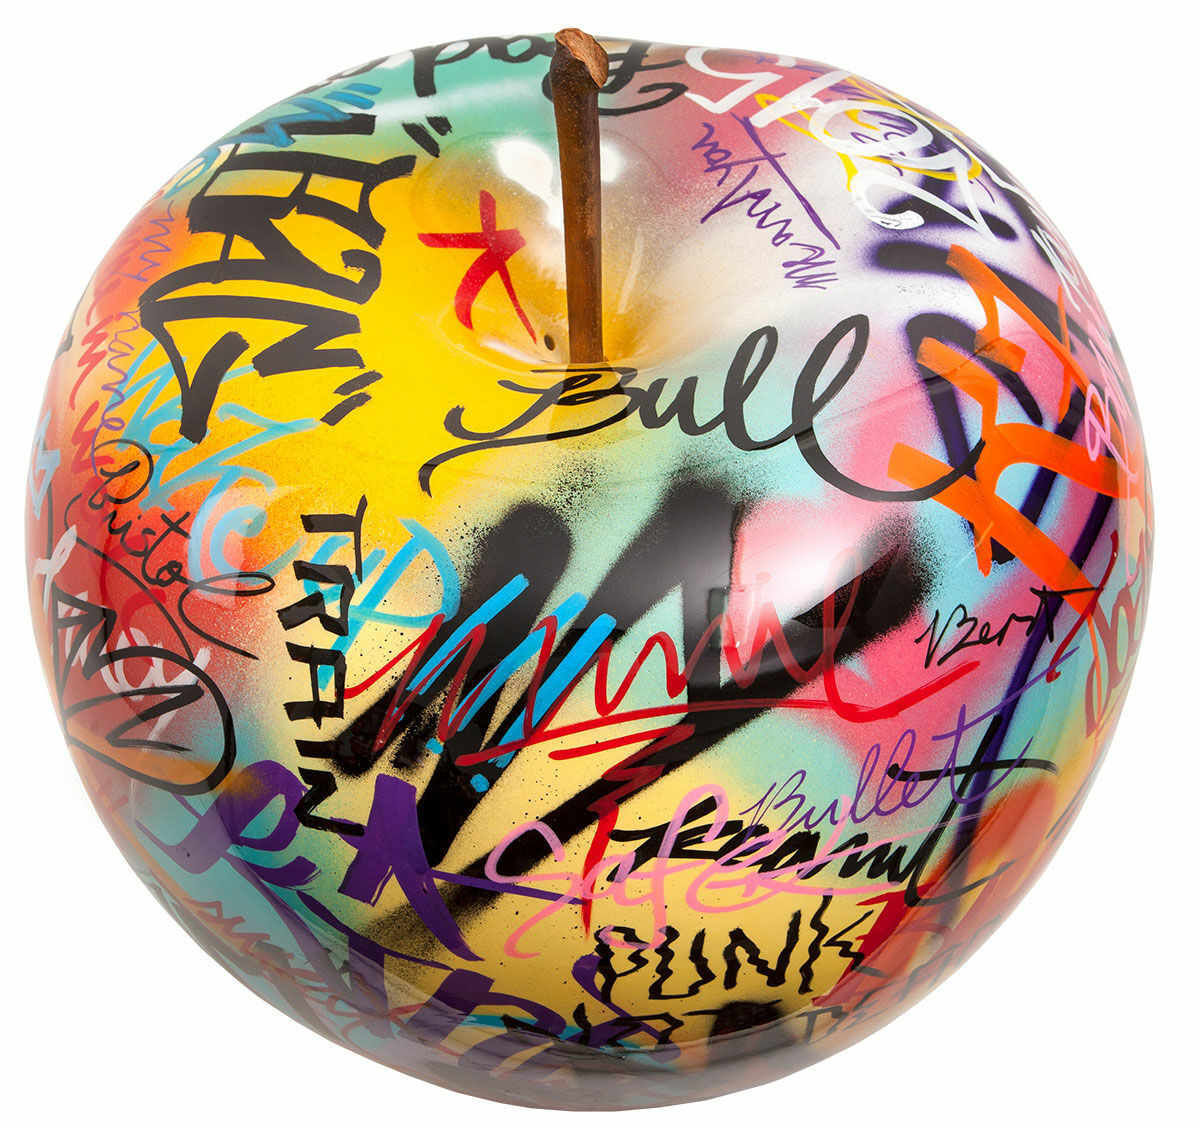 Objet en céramique "Apple Graffiti" von Bruno